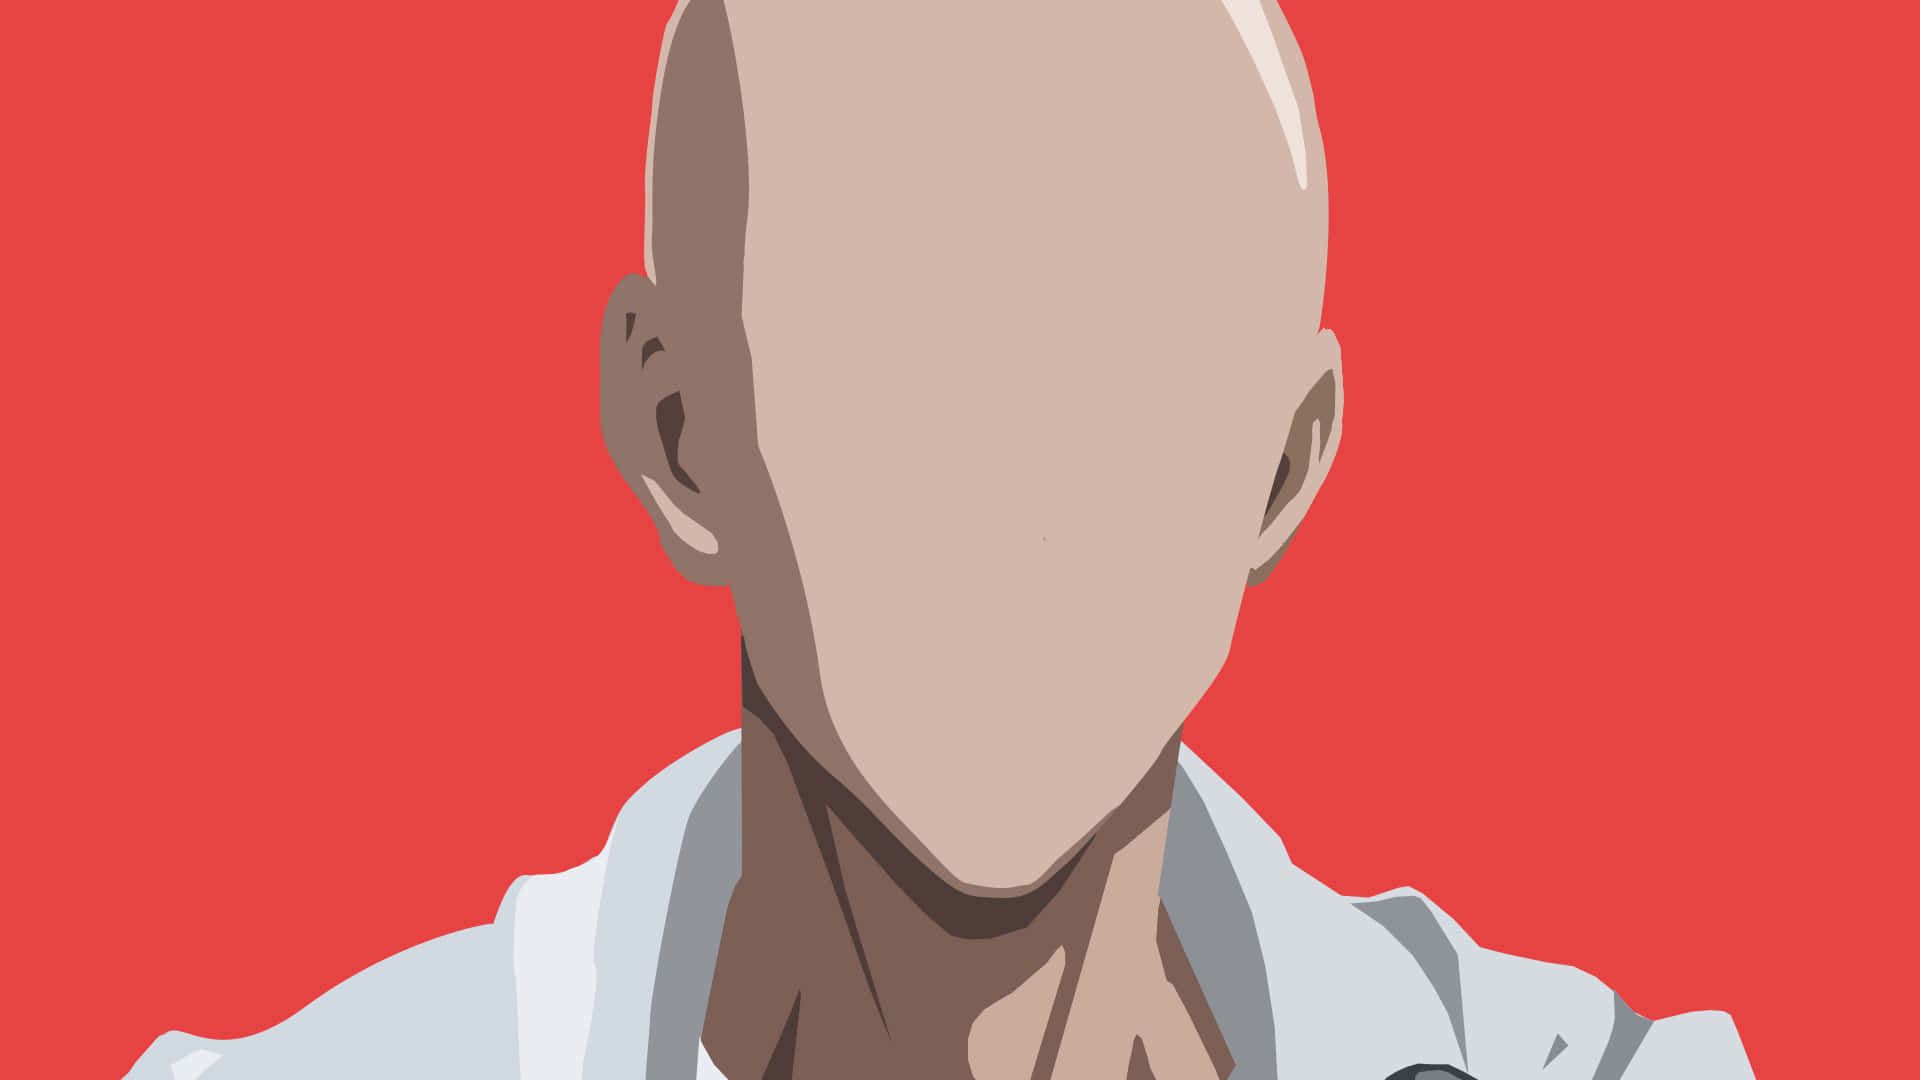 Artistic Illustration Of A Bald Human Face Wallpaper